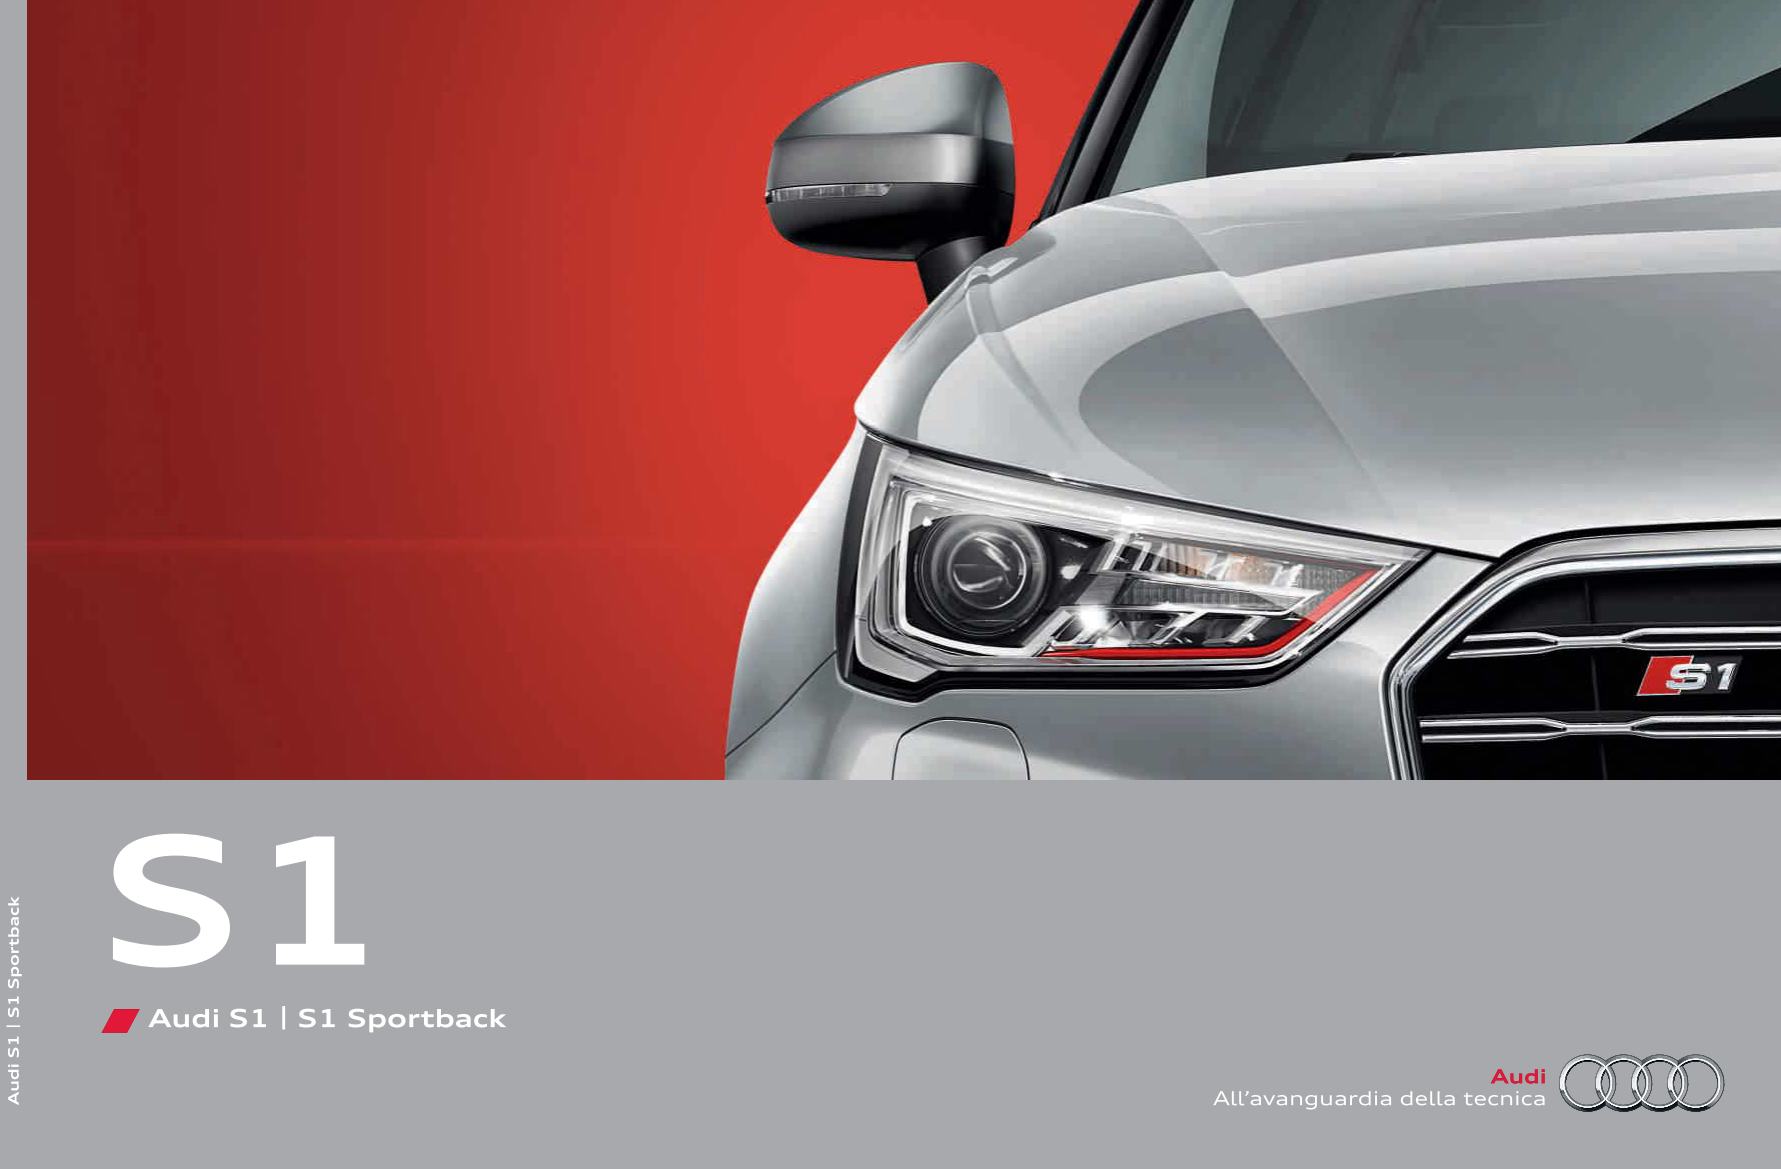 Catalogo Audi S1 2014 - image 27211_page1 on https://motori.net